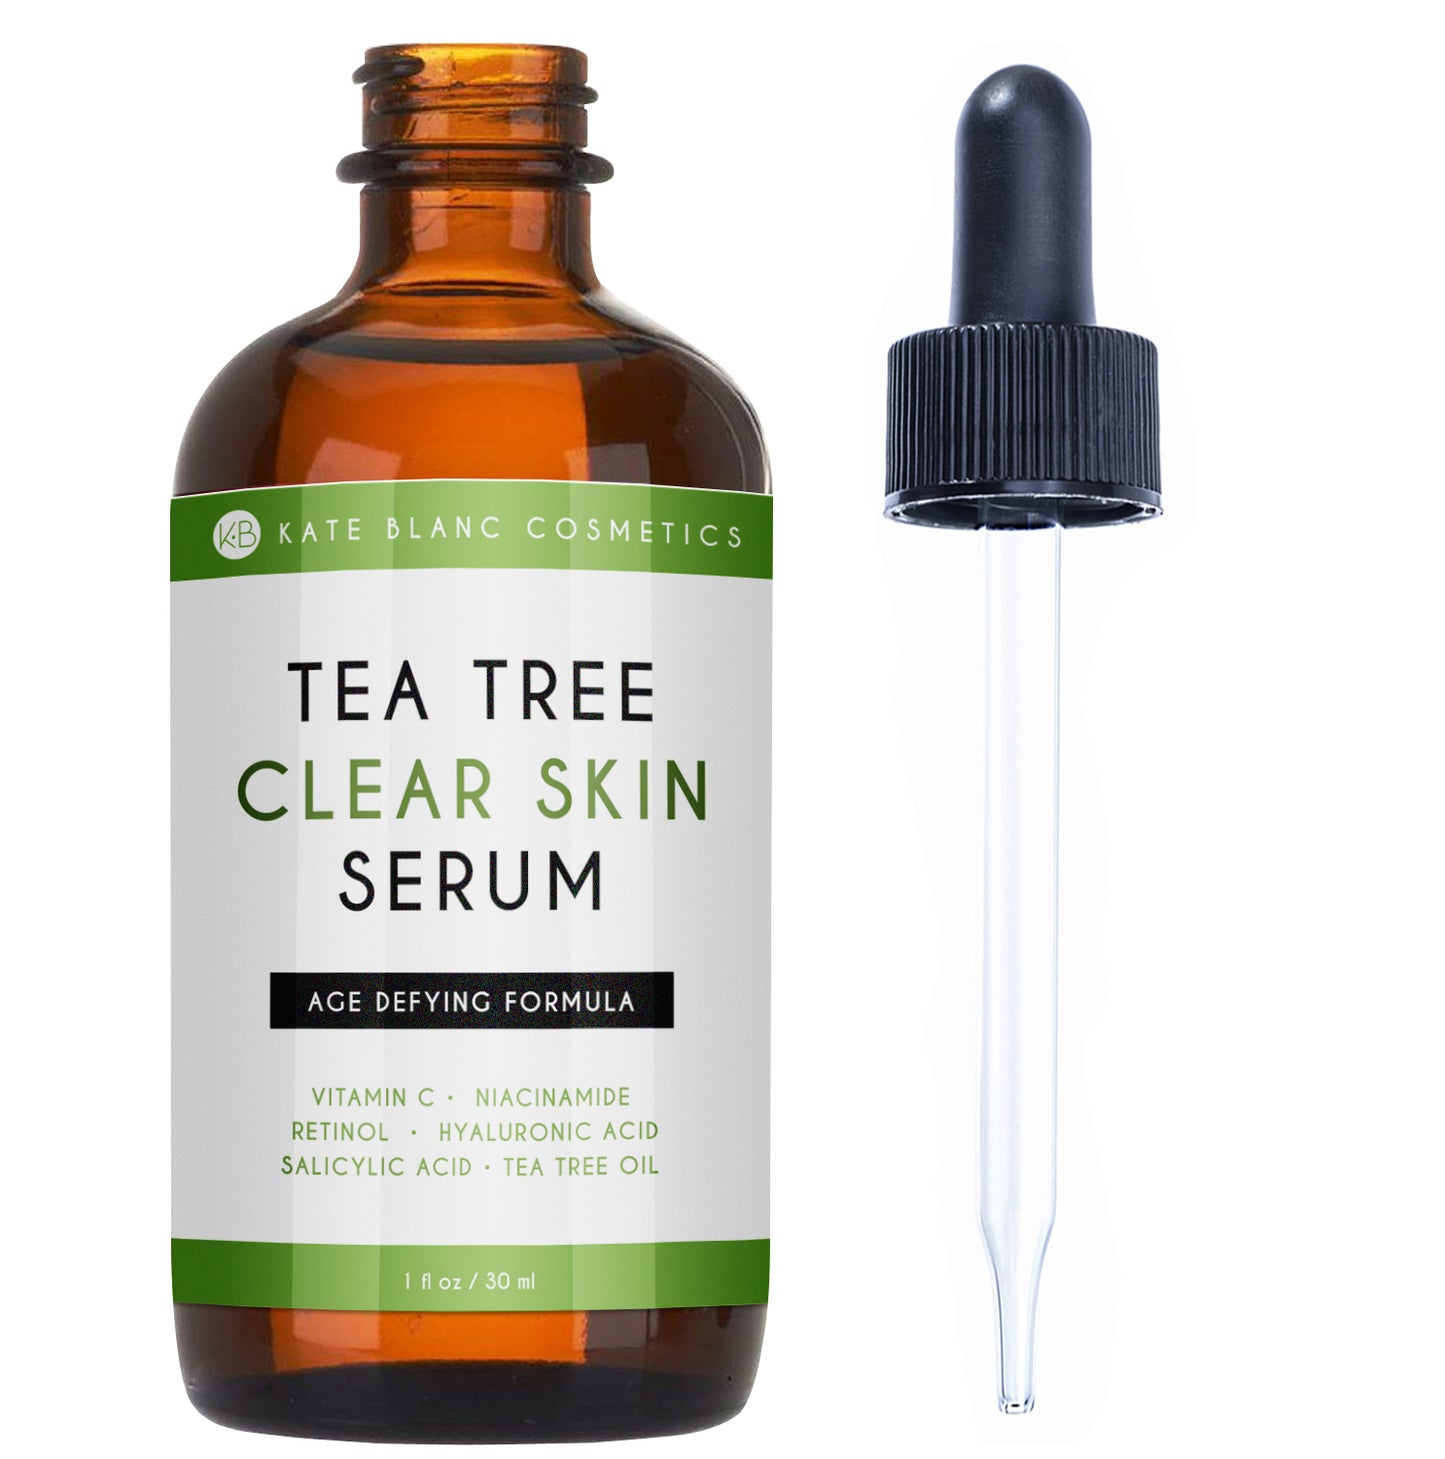 Tea Tree Clear Skin Serum